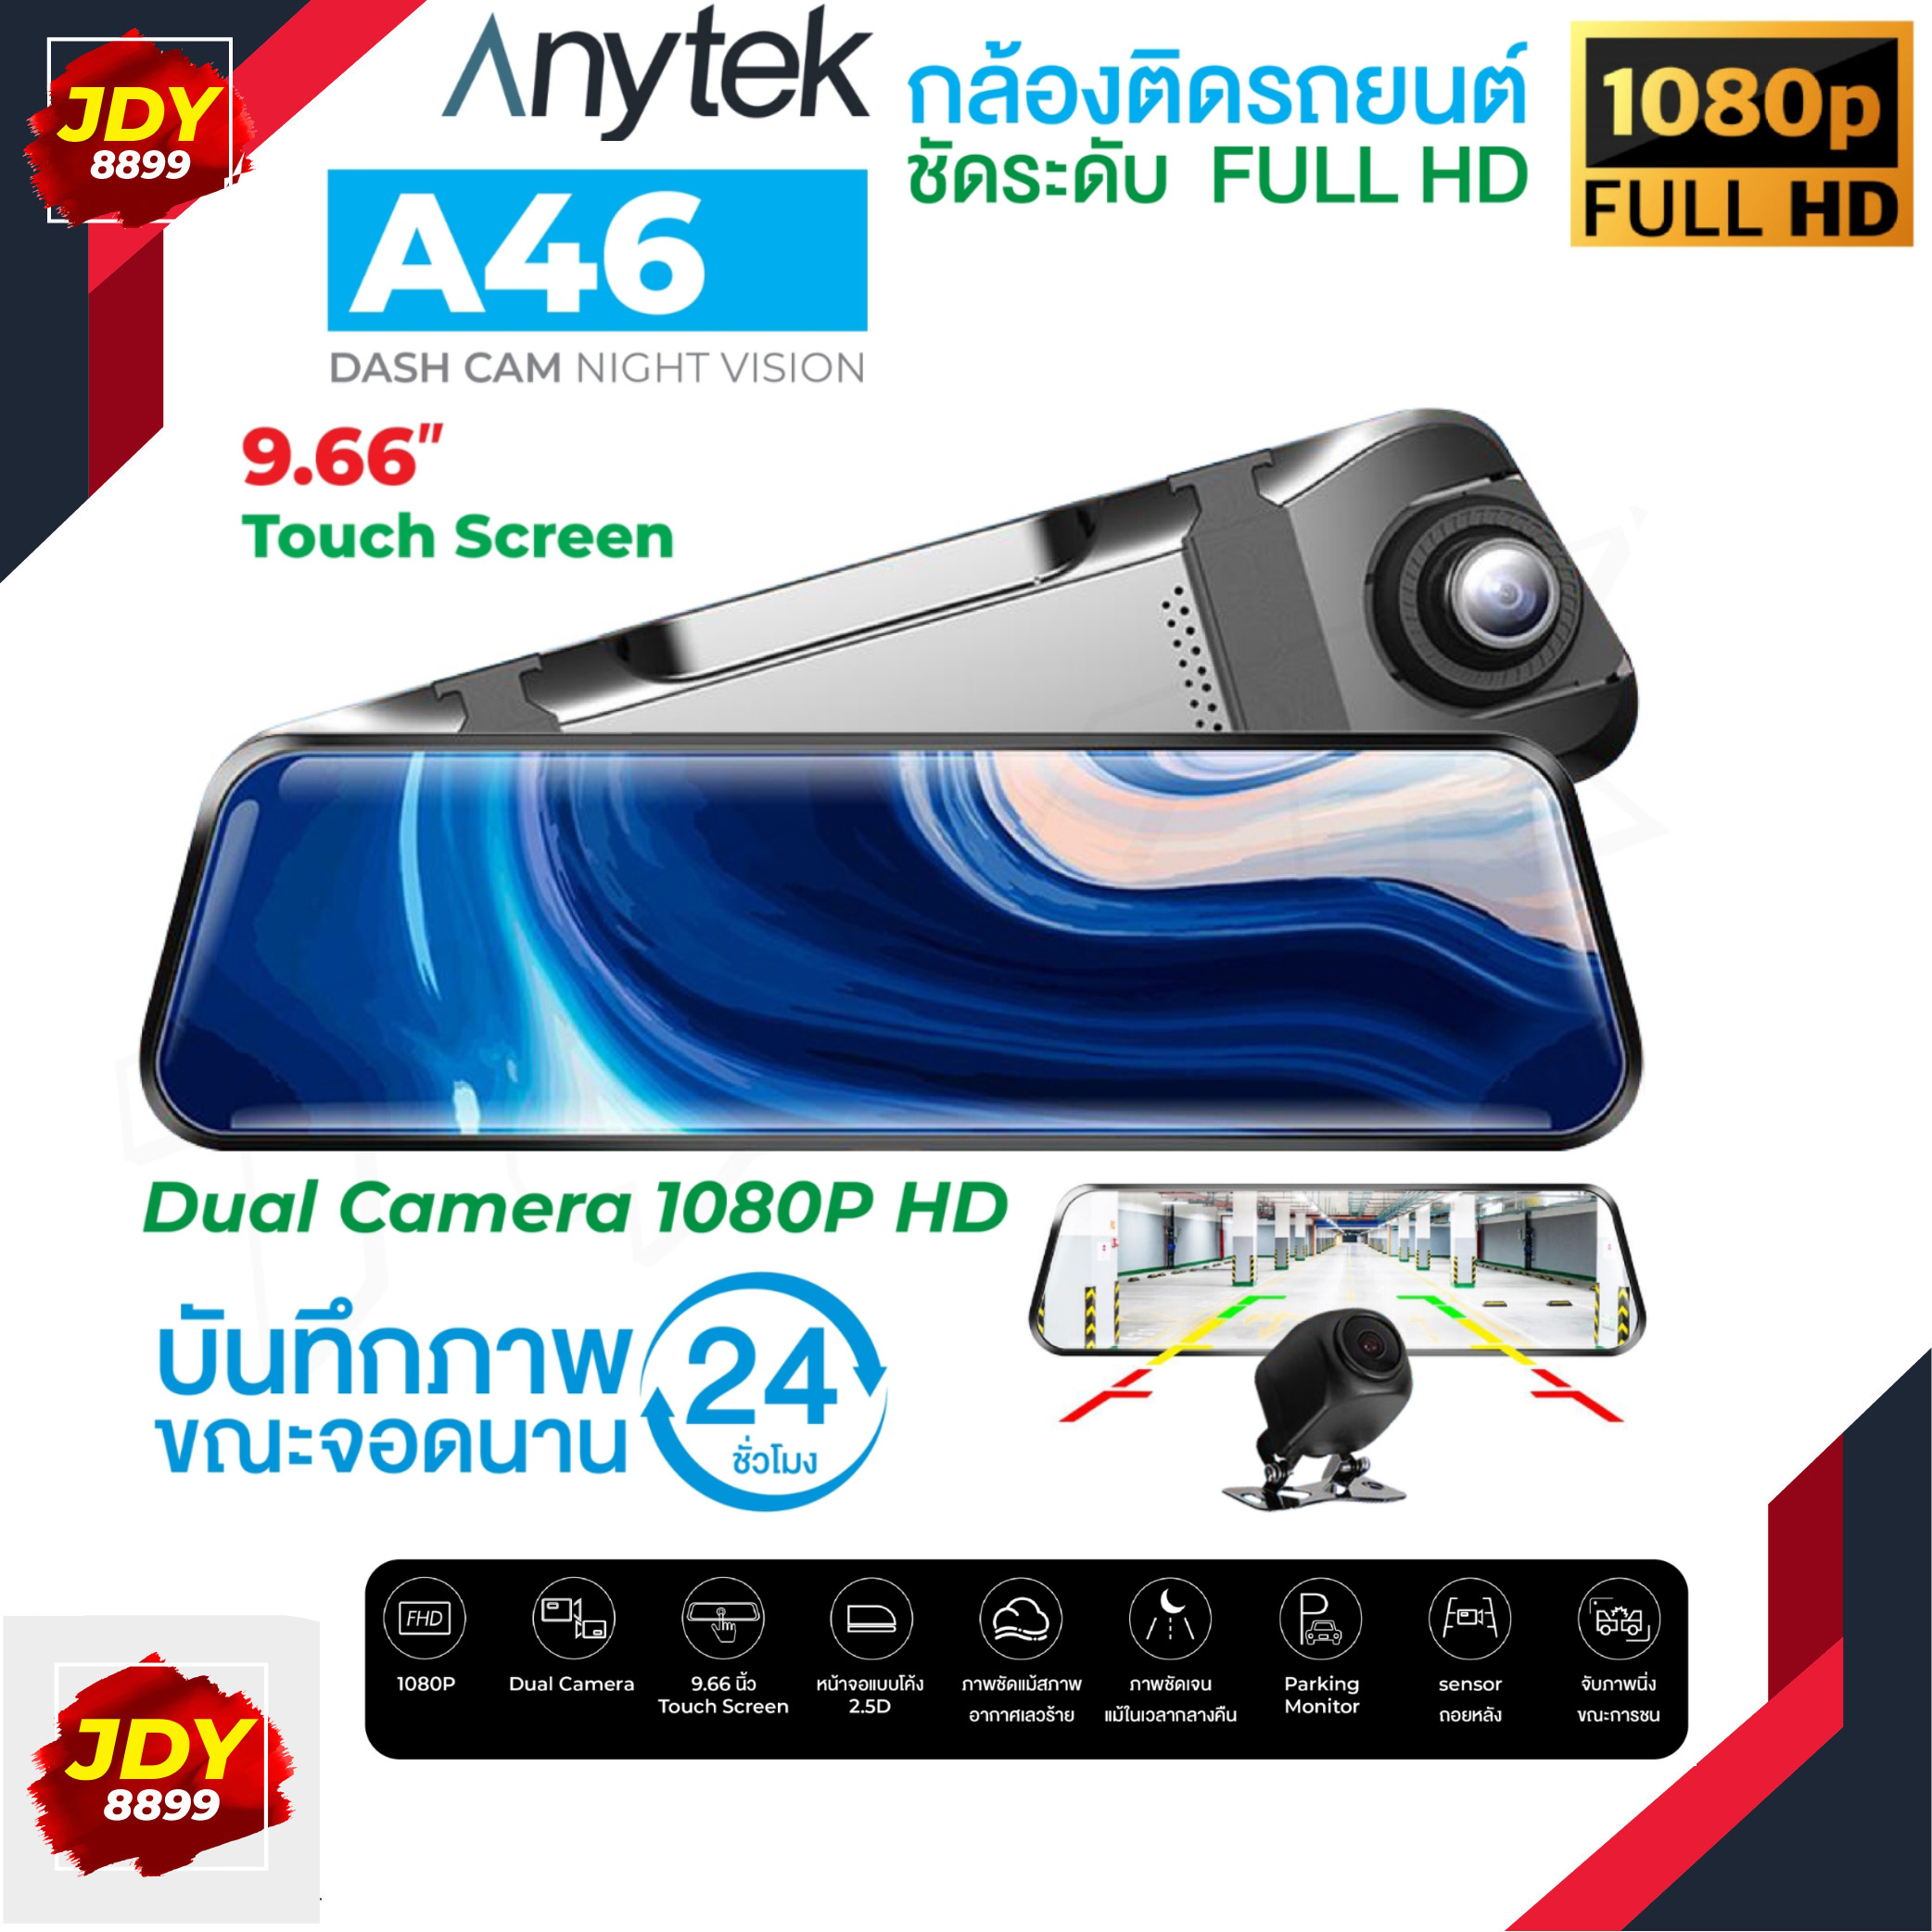 Anytek A46 Full HD 1080 จุดDash Cam 9.66 นิ้วจอแสดงผลIPSแสงดาวNight Visionที่จอดรถการตรวจสอบรถDVRกล้องแดชบอร์ดด้วยกล้องมองหลัง JDY8899